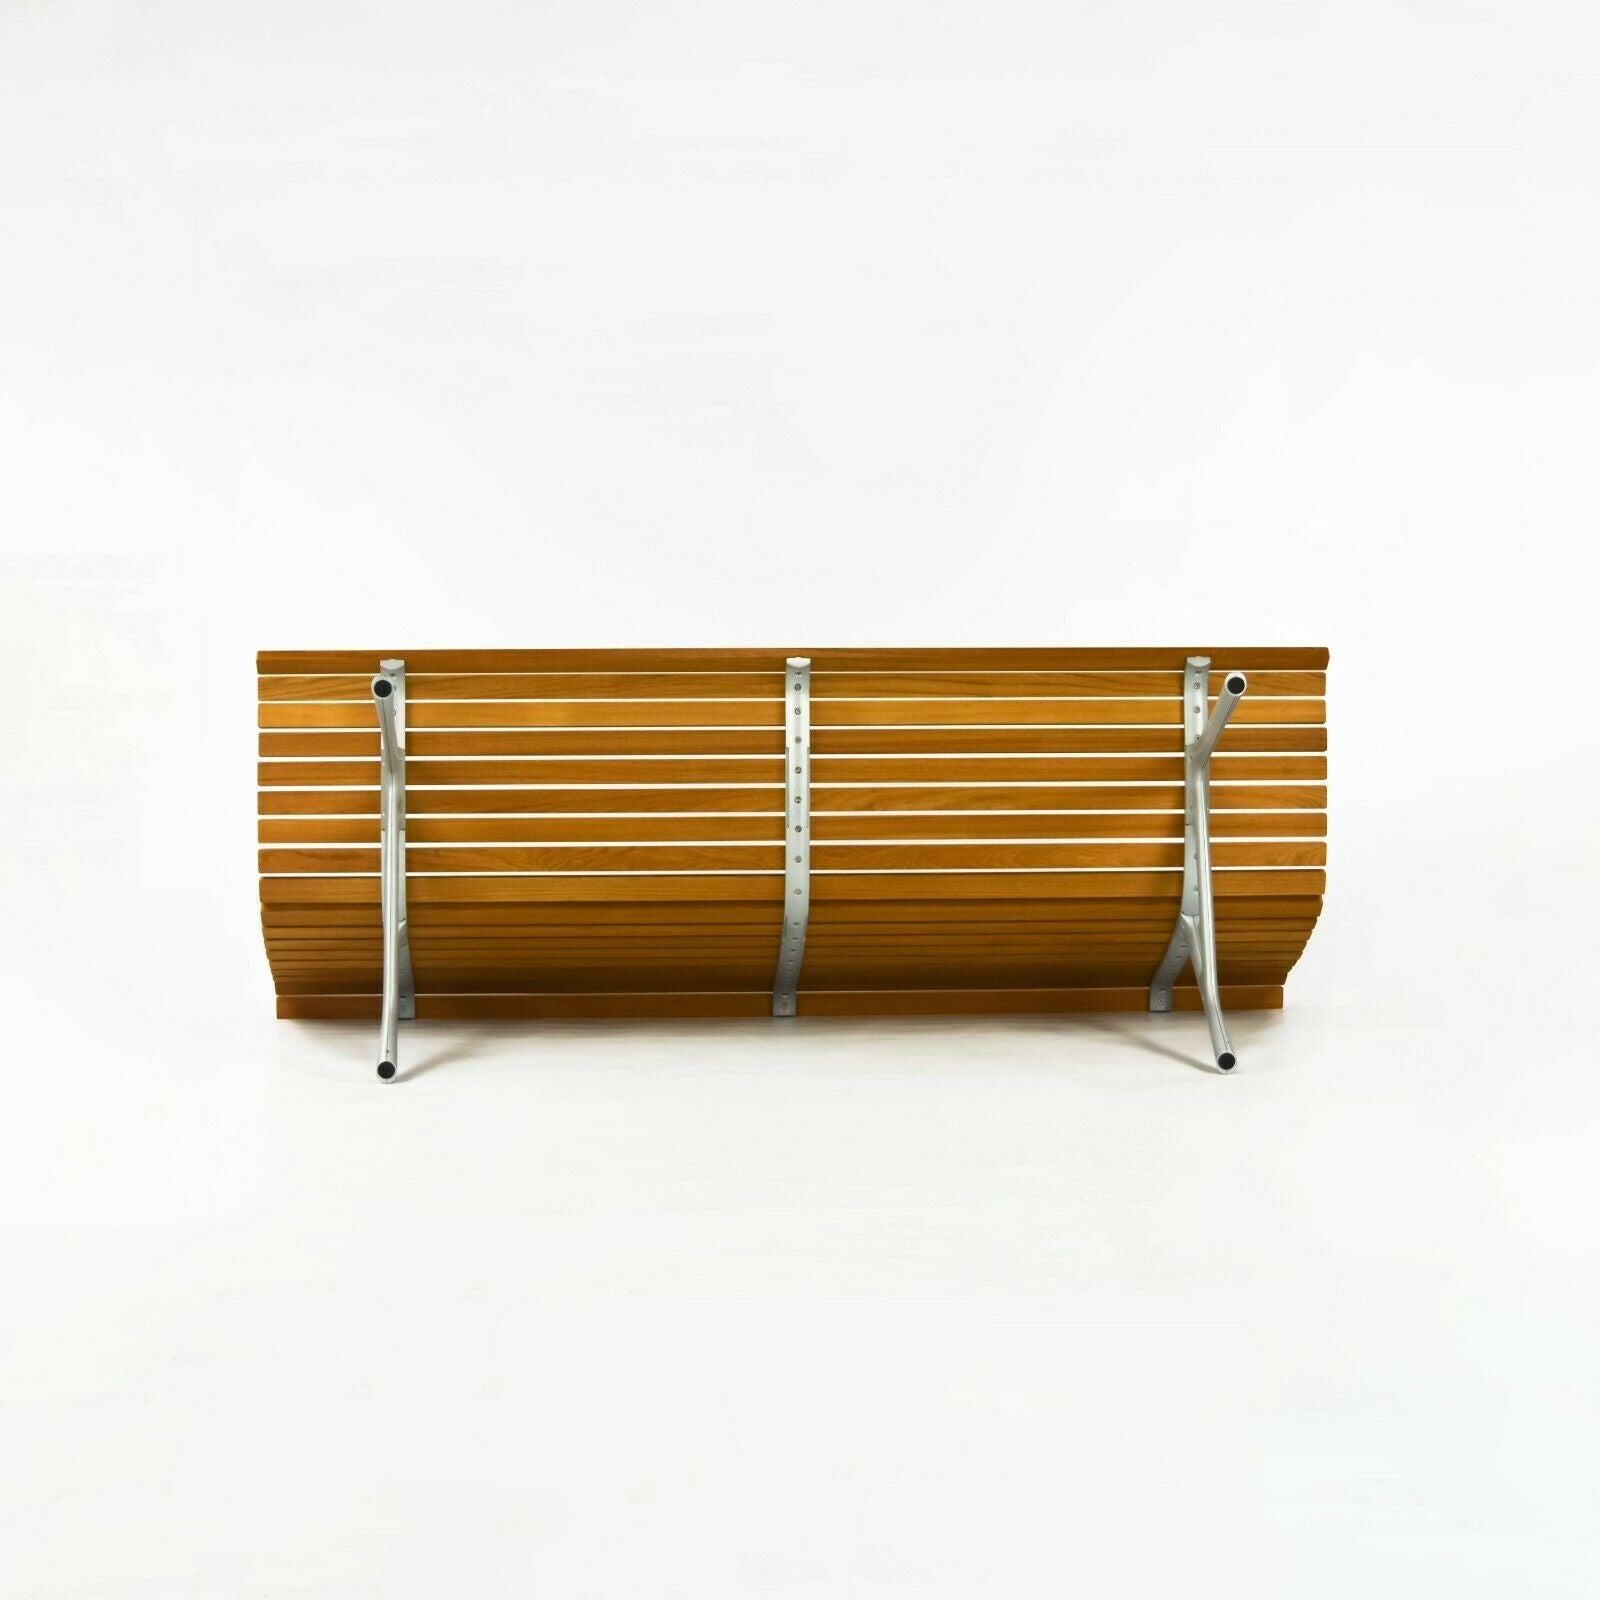 2010 Alias Teak Outdoor Three Seat Bench Settee in Cast Aluminum by Alberto Meda For Sale 1